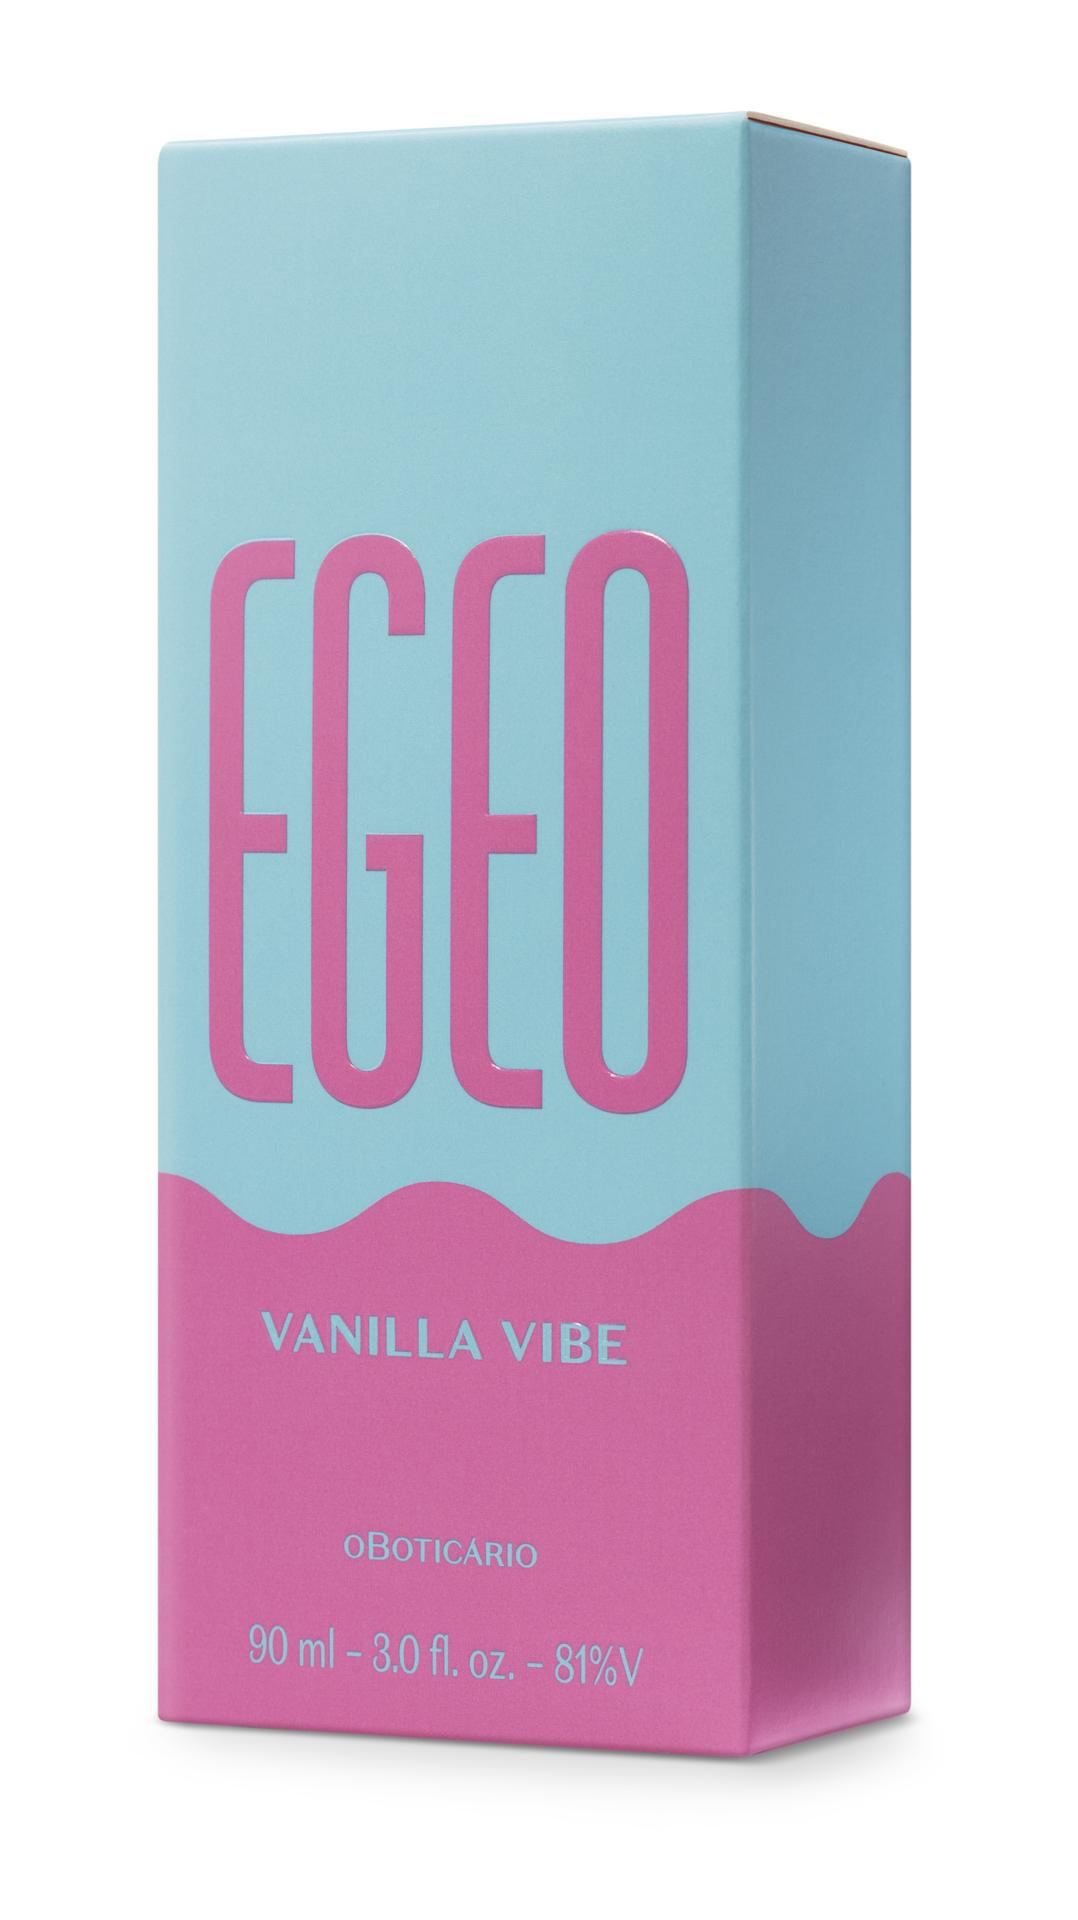 Egeo Vanilla Vibe Eau de Toilette, 90ml